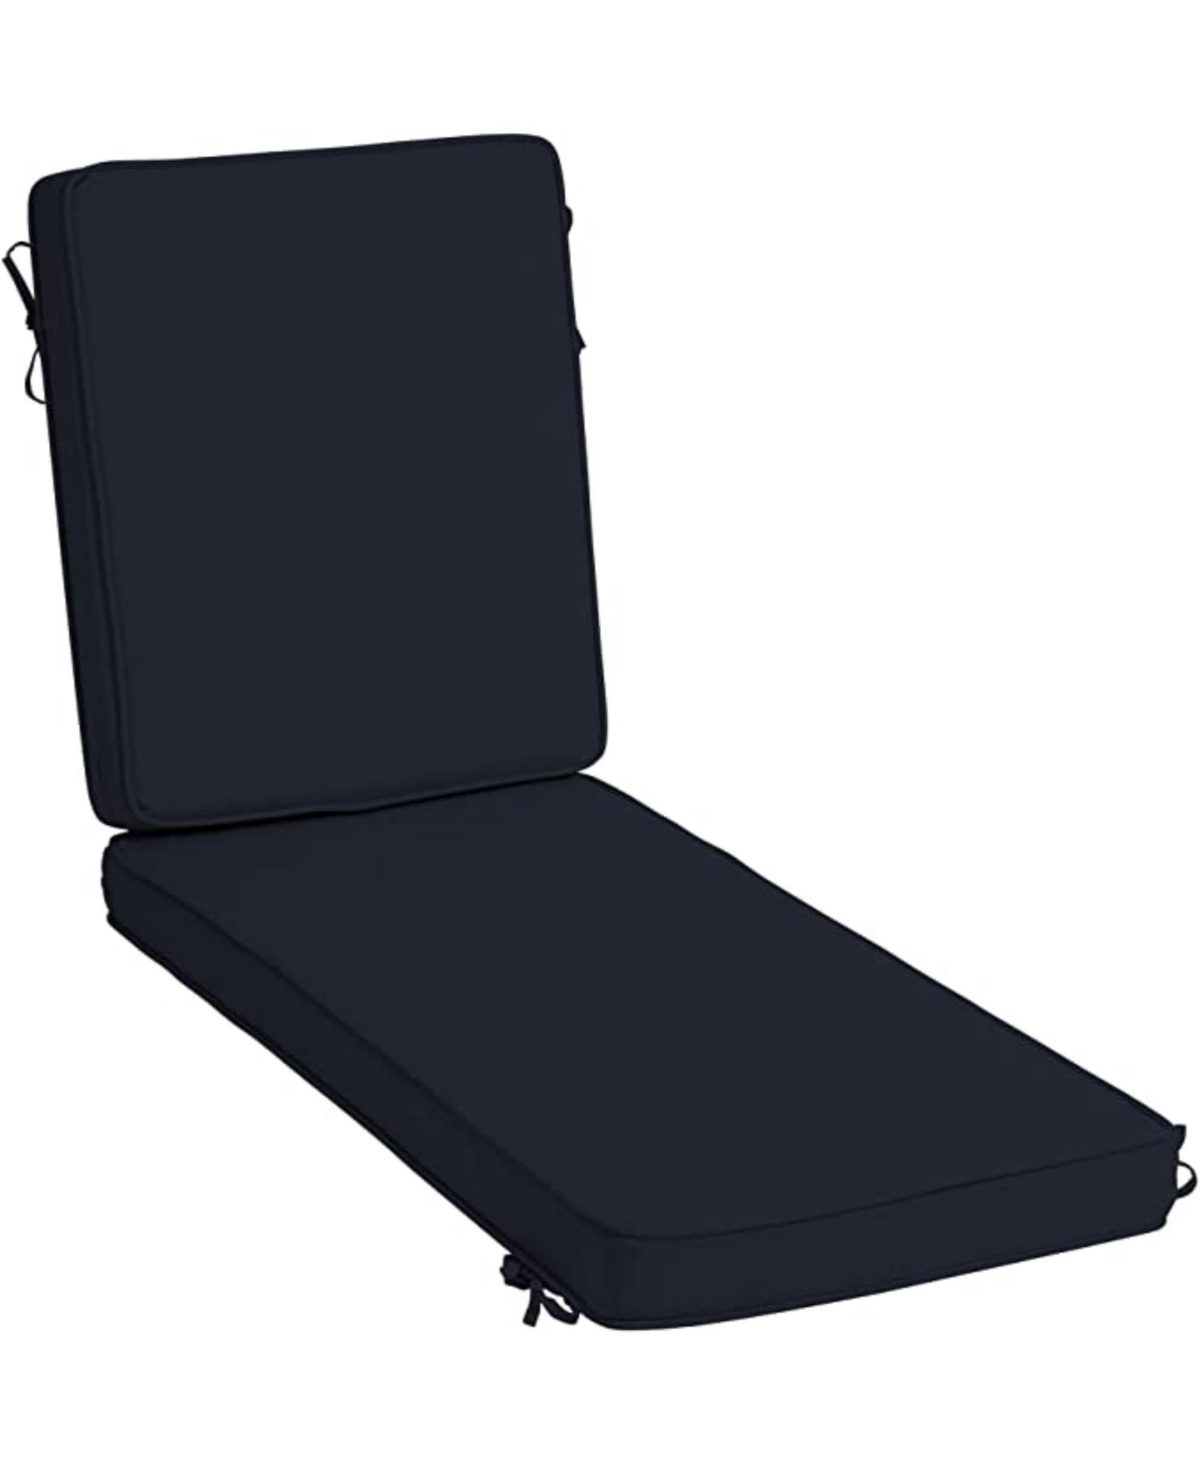 Arden ProFoam EverTru Acrylic Outdoor Chaise Lounge Cushion Navy - Multi